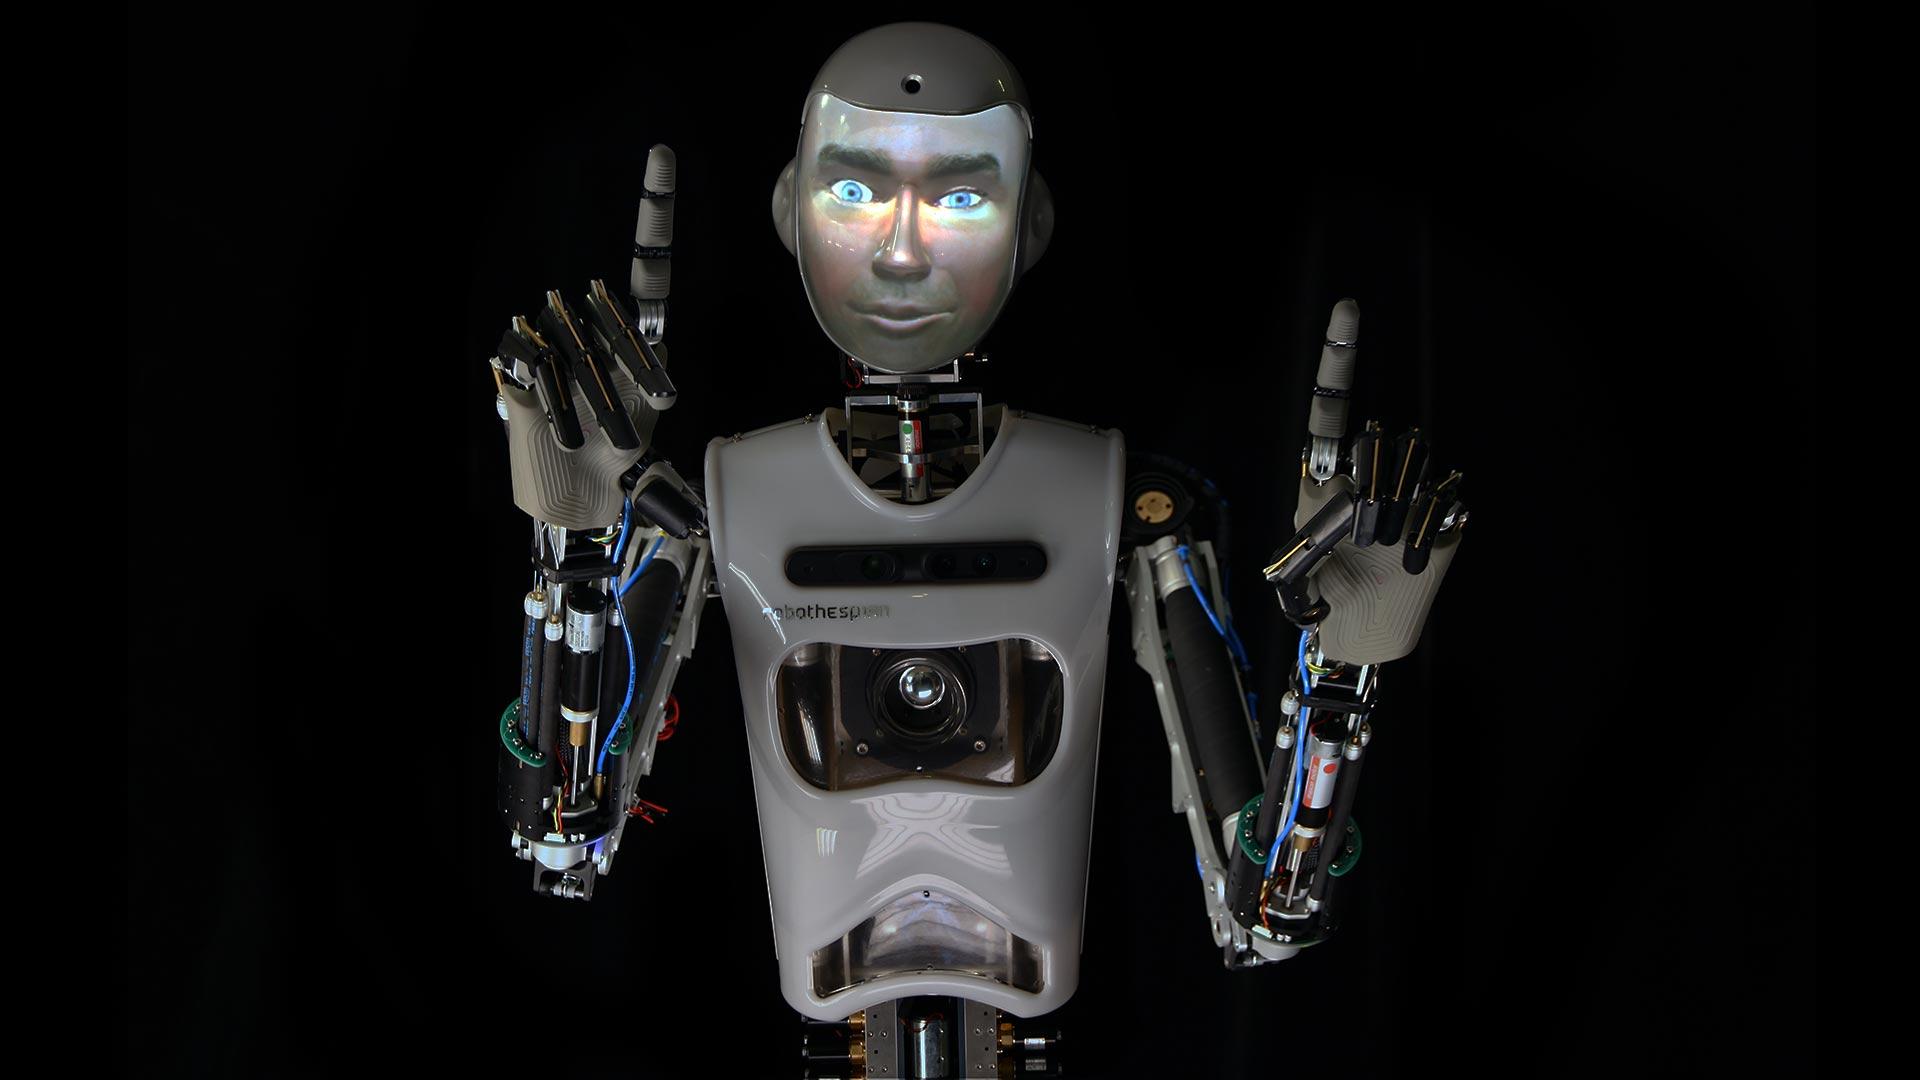 Humanoid Robot Gallery & SociBot Image